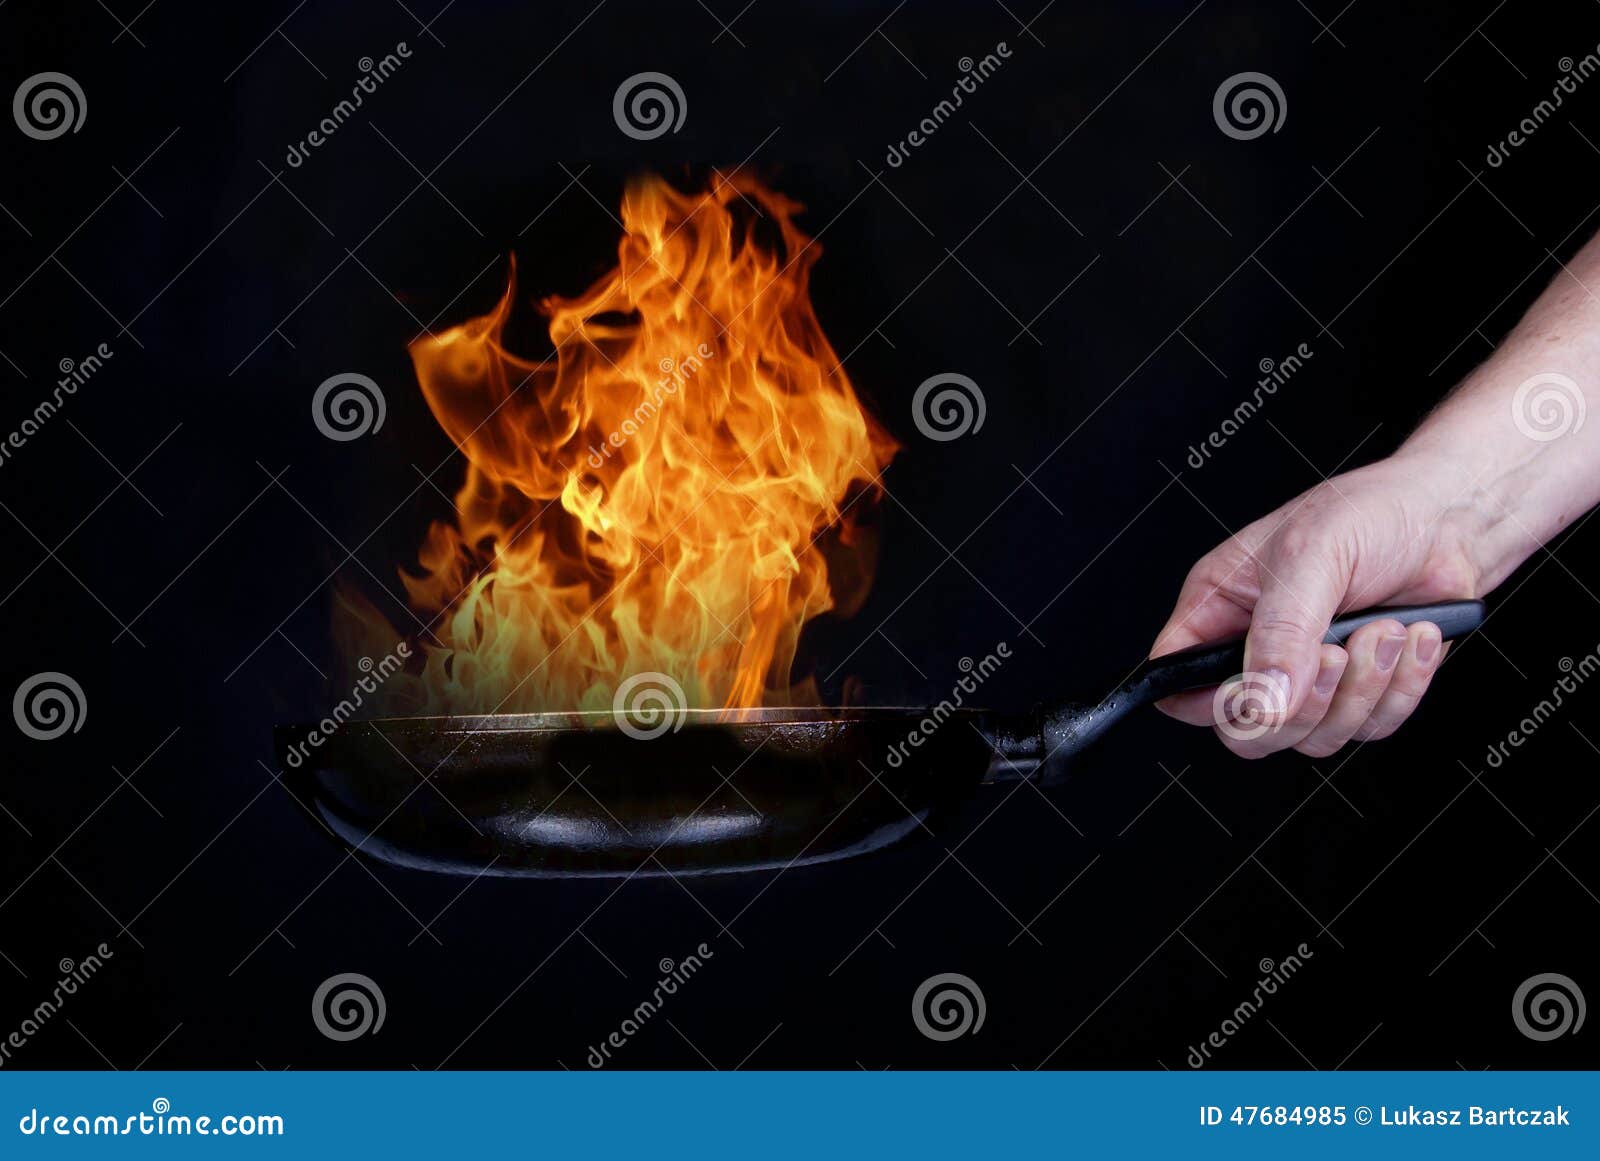 fire on frying pan